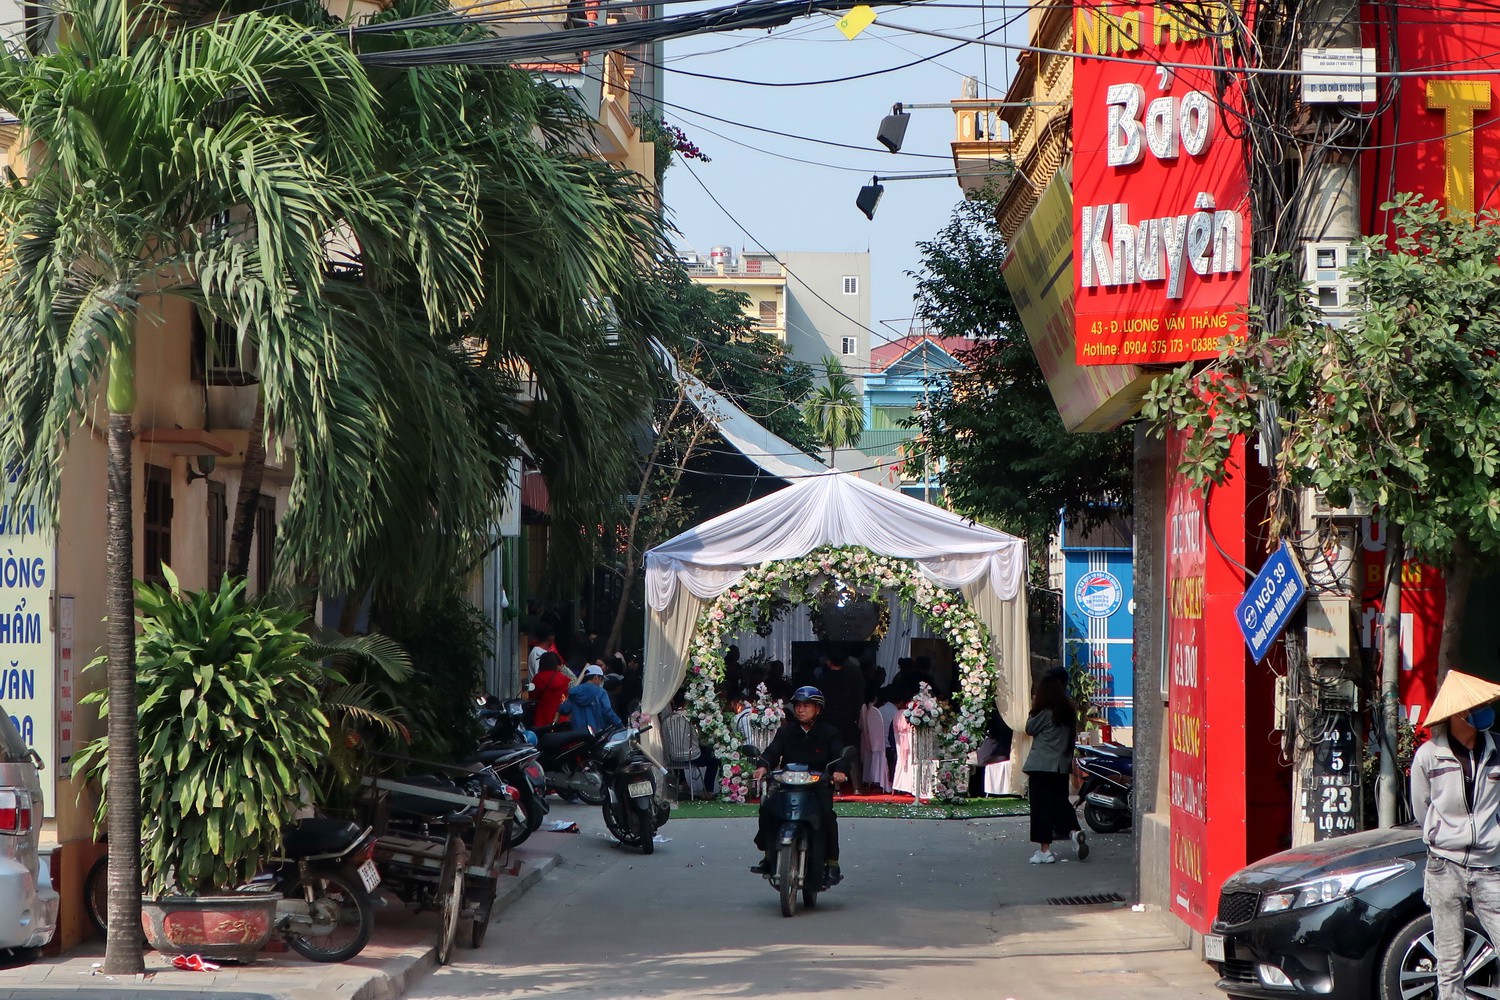 Wedding party tent in Ninh Binh